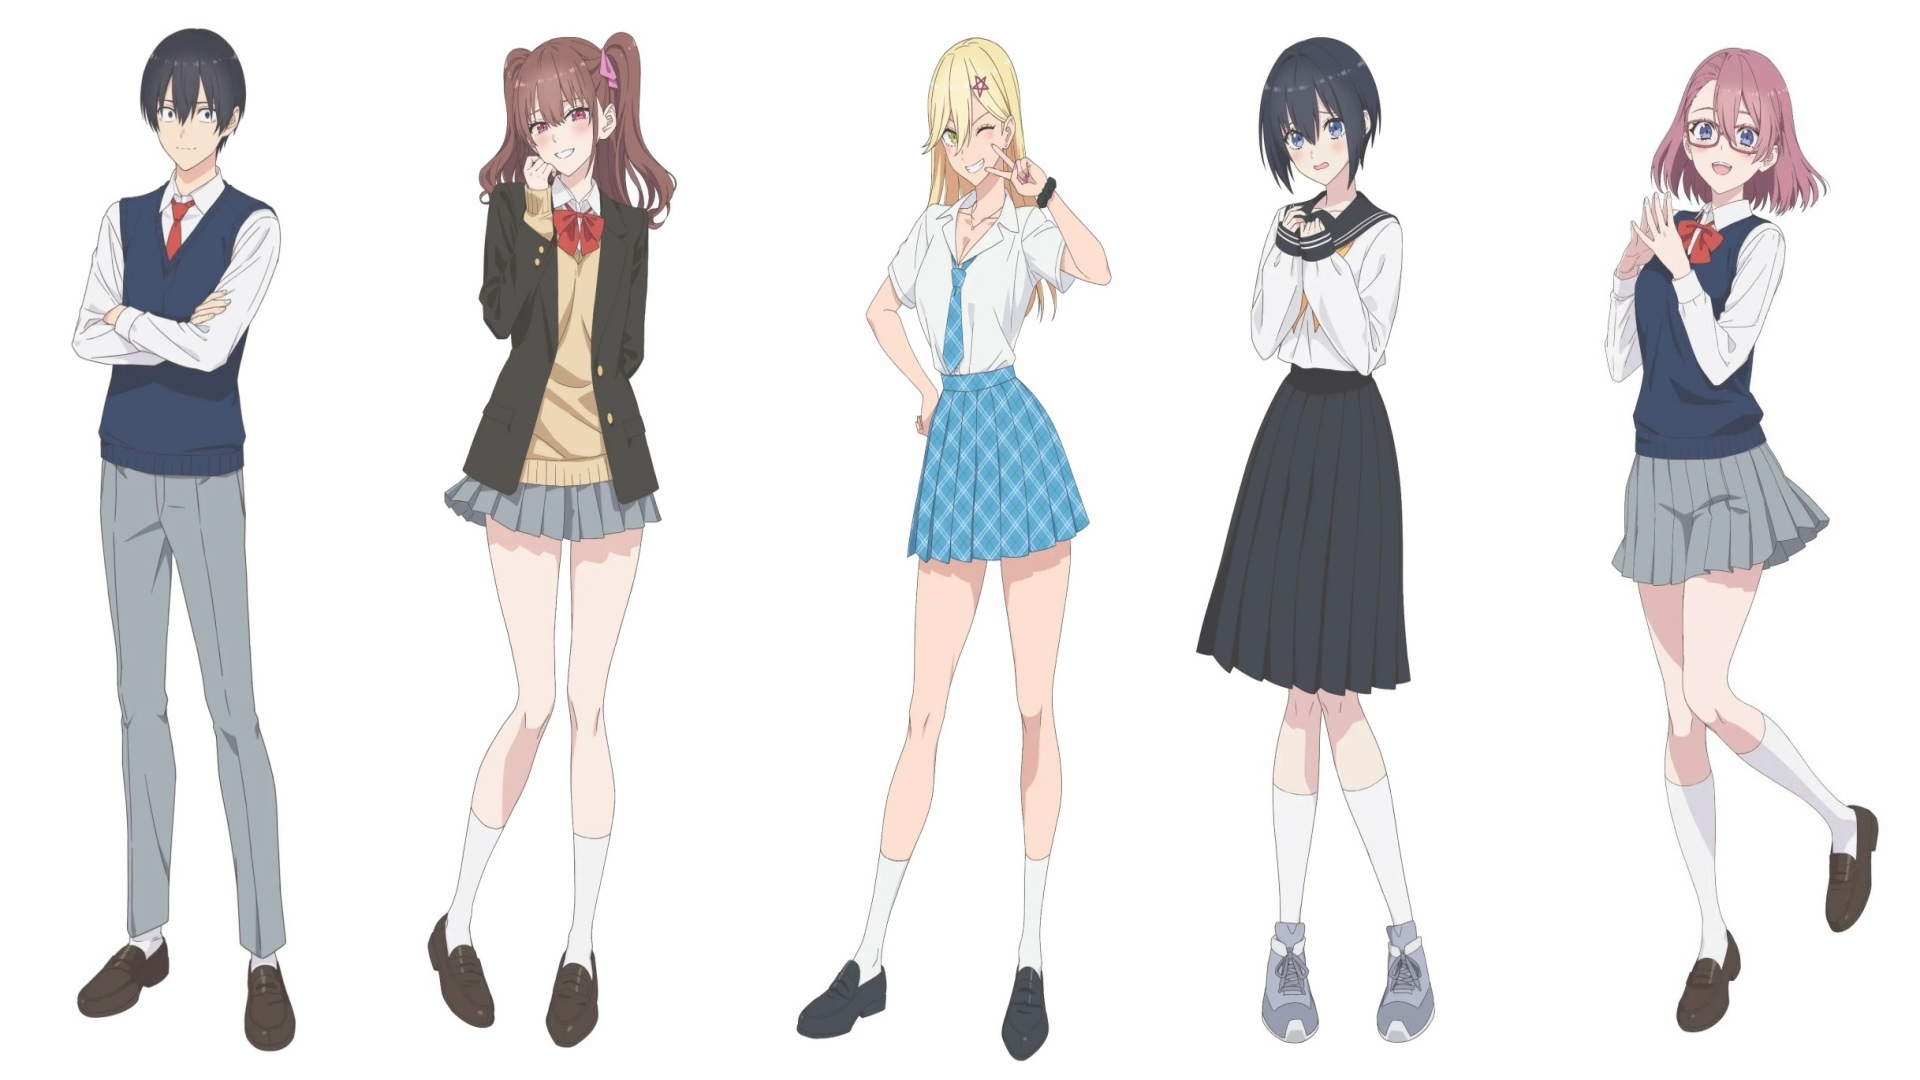 The Main Characters In 2.5 Dimensional Seduction - Masamune Okumura, Mikari Tachibana, Aria Kisaki, Noa, And Ririsa Lilysa Amano Respectively (J.C.Staff)